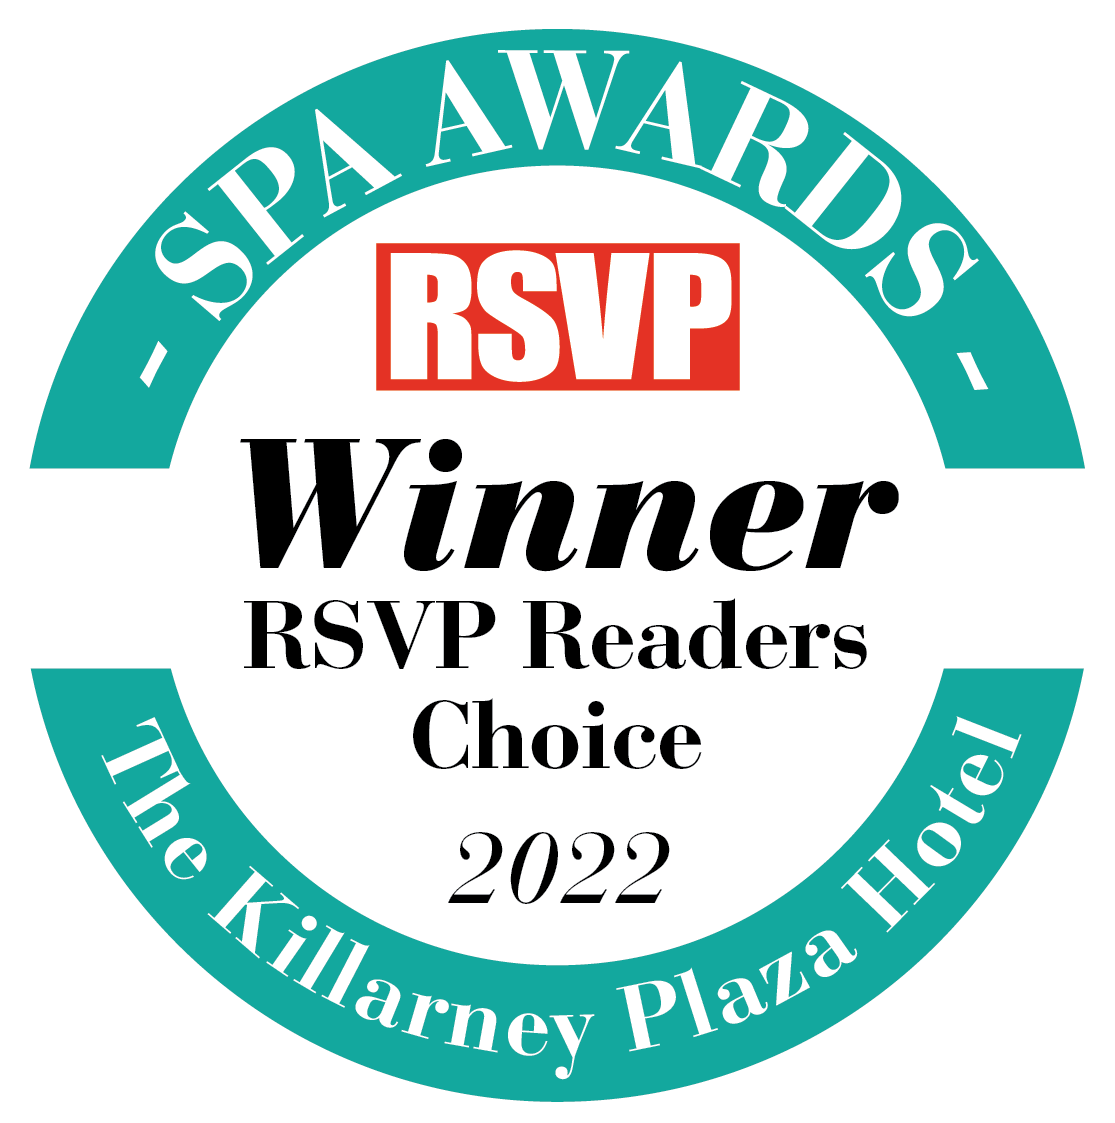 the killarney plaza hotel reader choice winner 2022